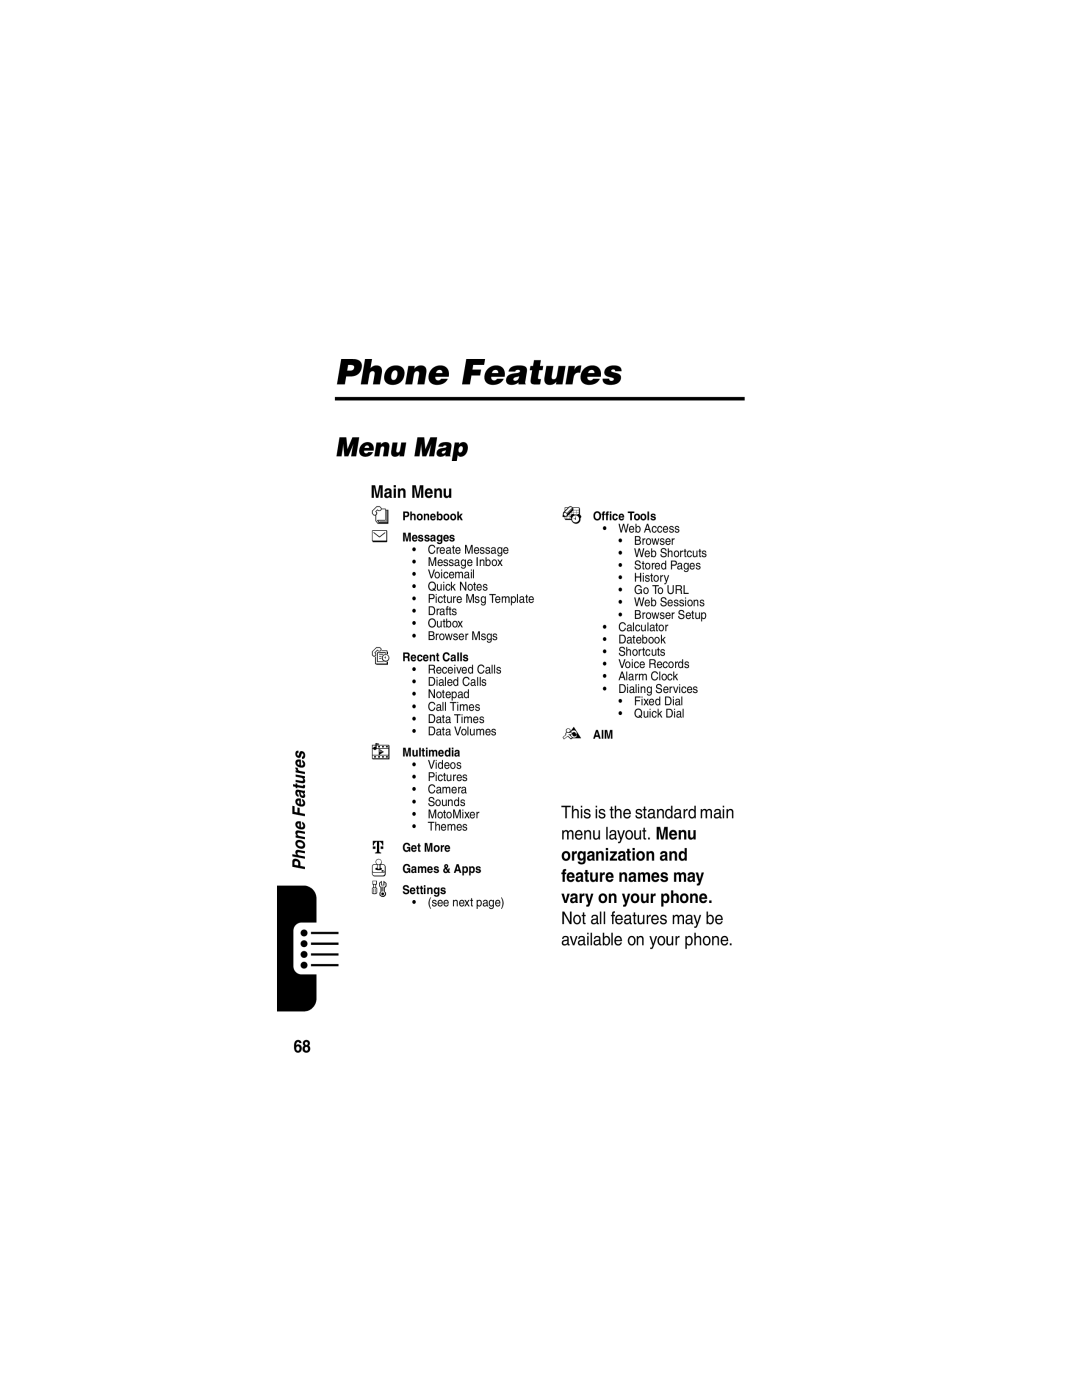 Motorola V330 manual Phone Features, Menu Map, Main Menu 